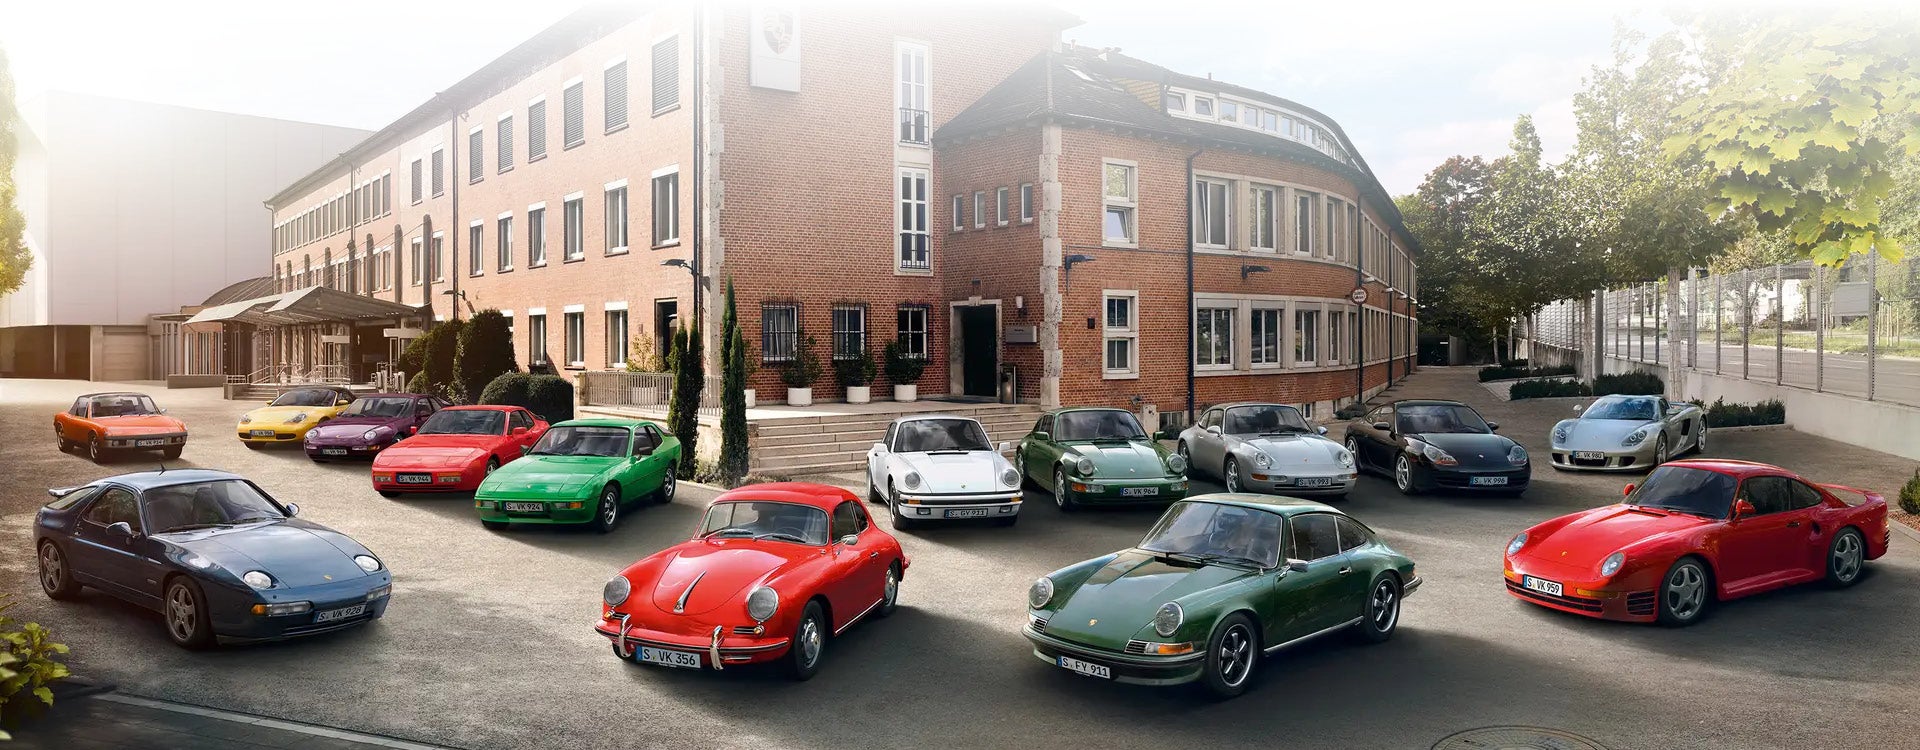 Classic Porsches